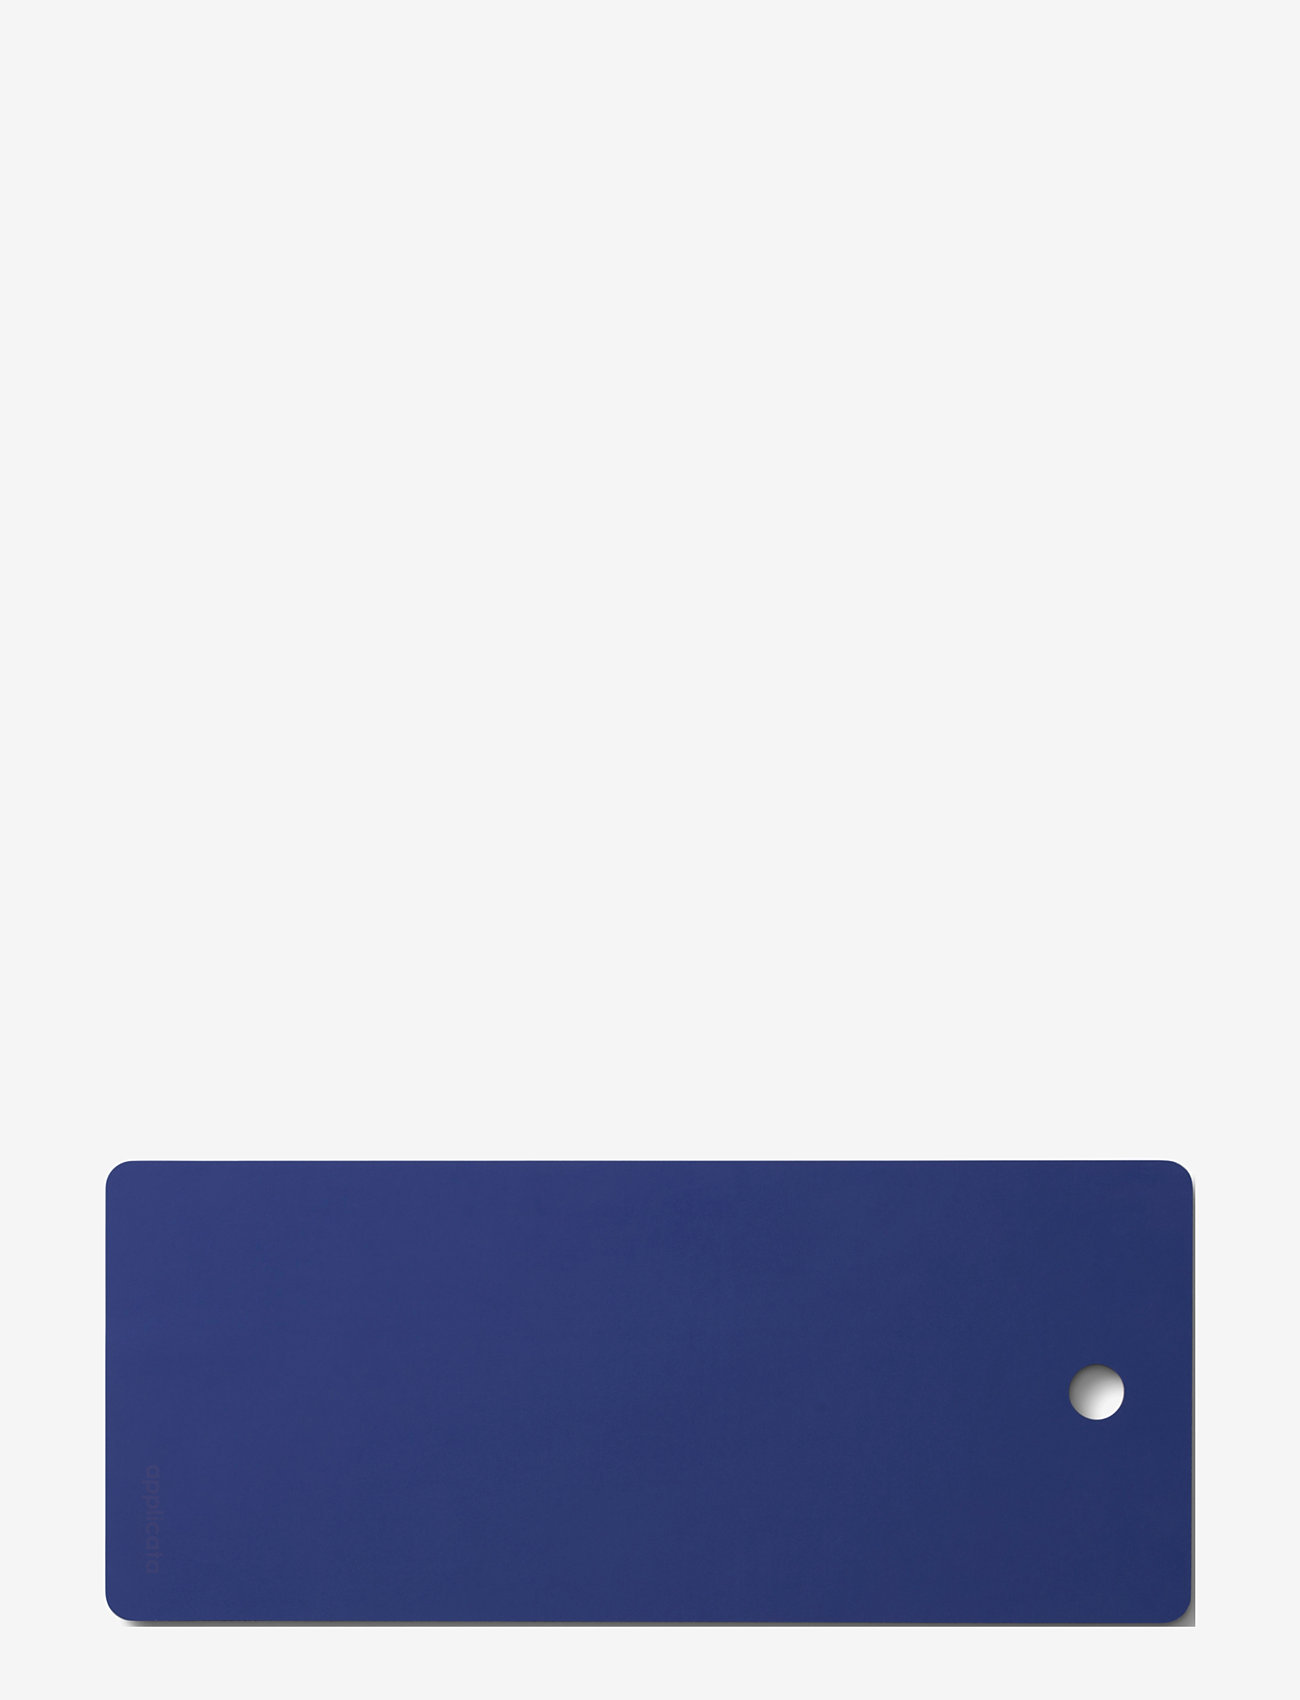 applicata - Tapas  board, Sand, large - geburtstagsgeschenke - blue - 1